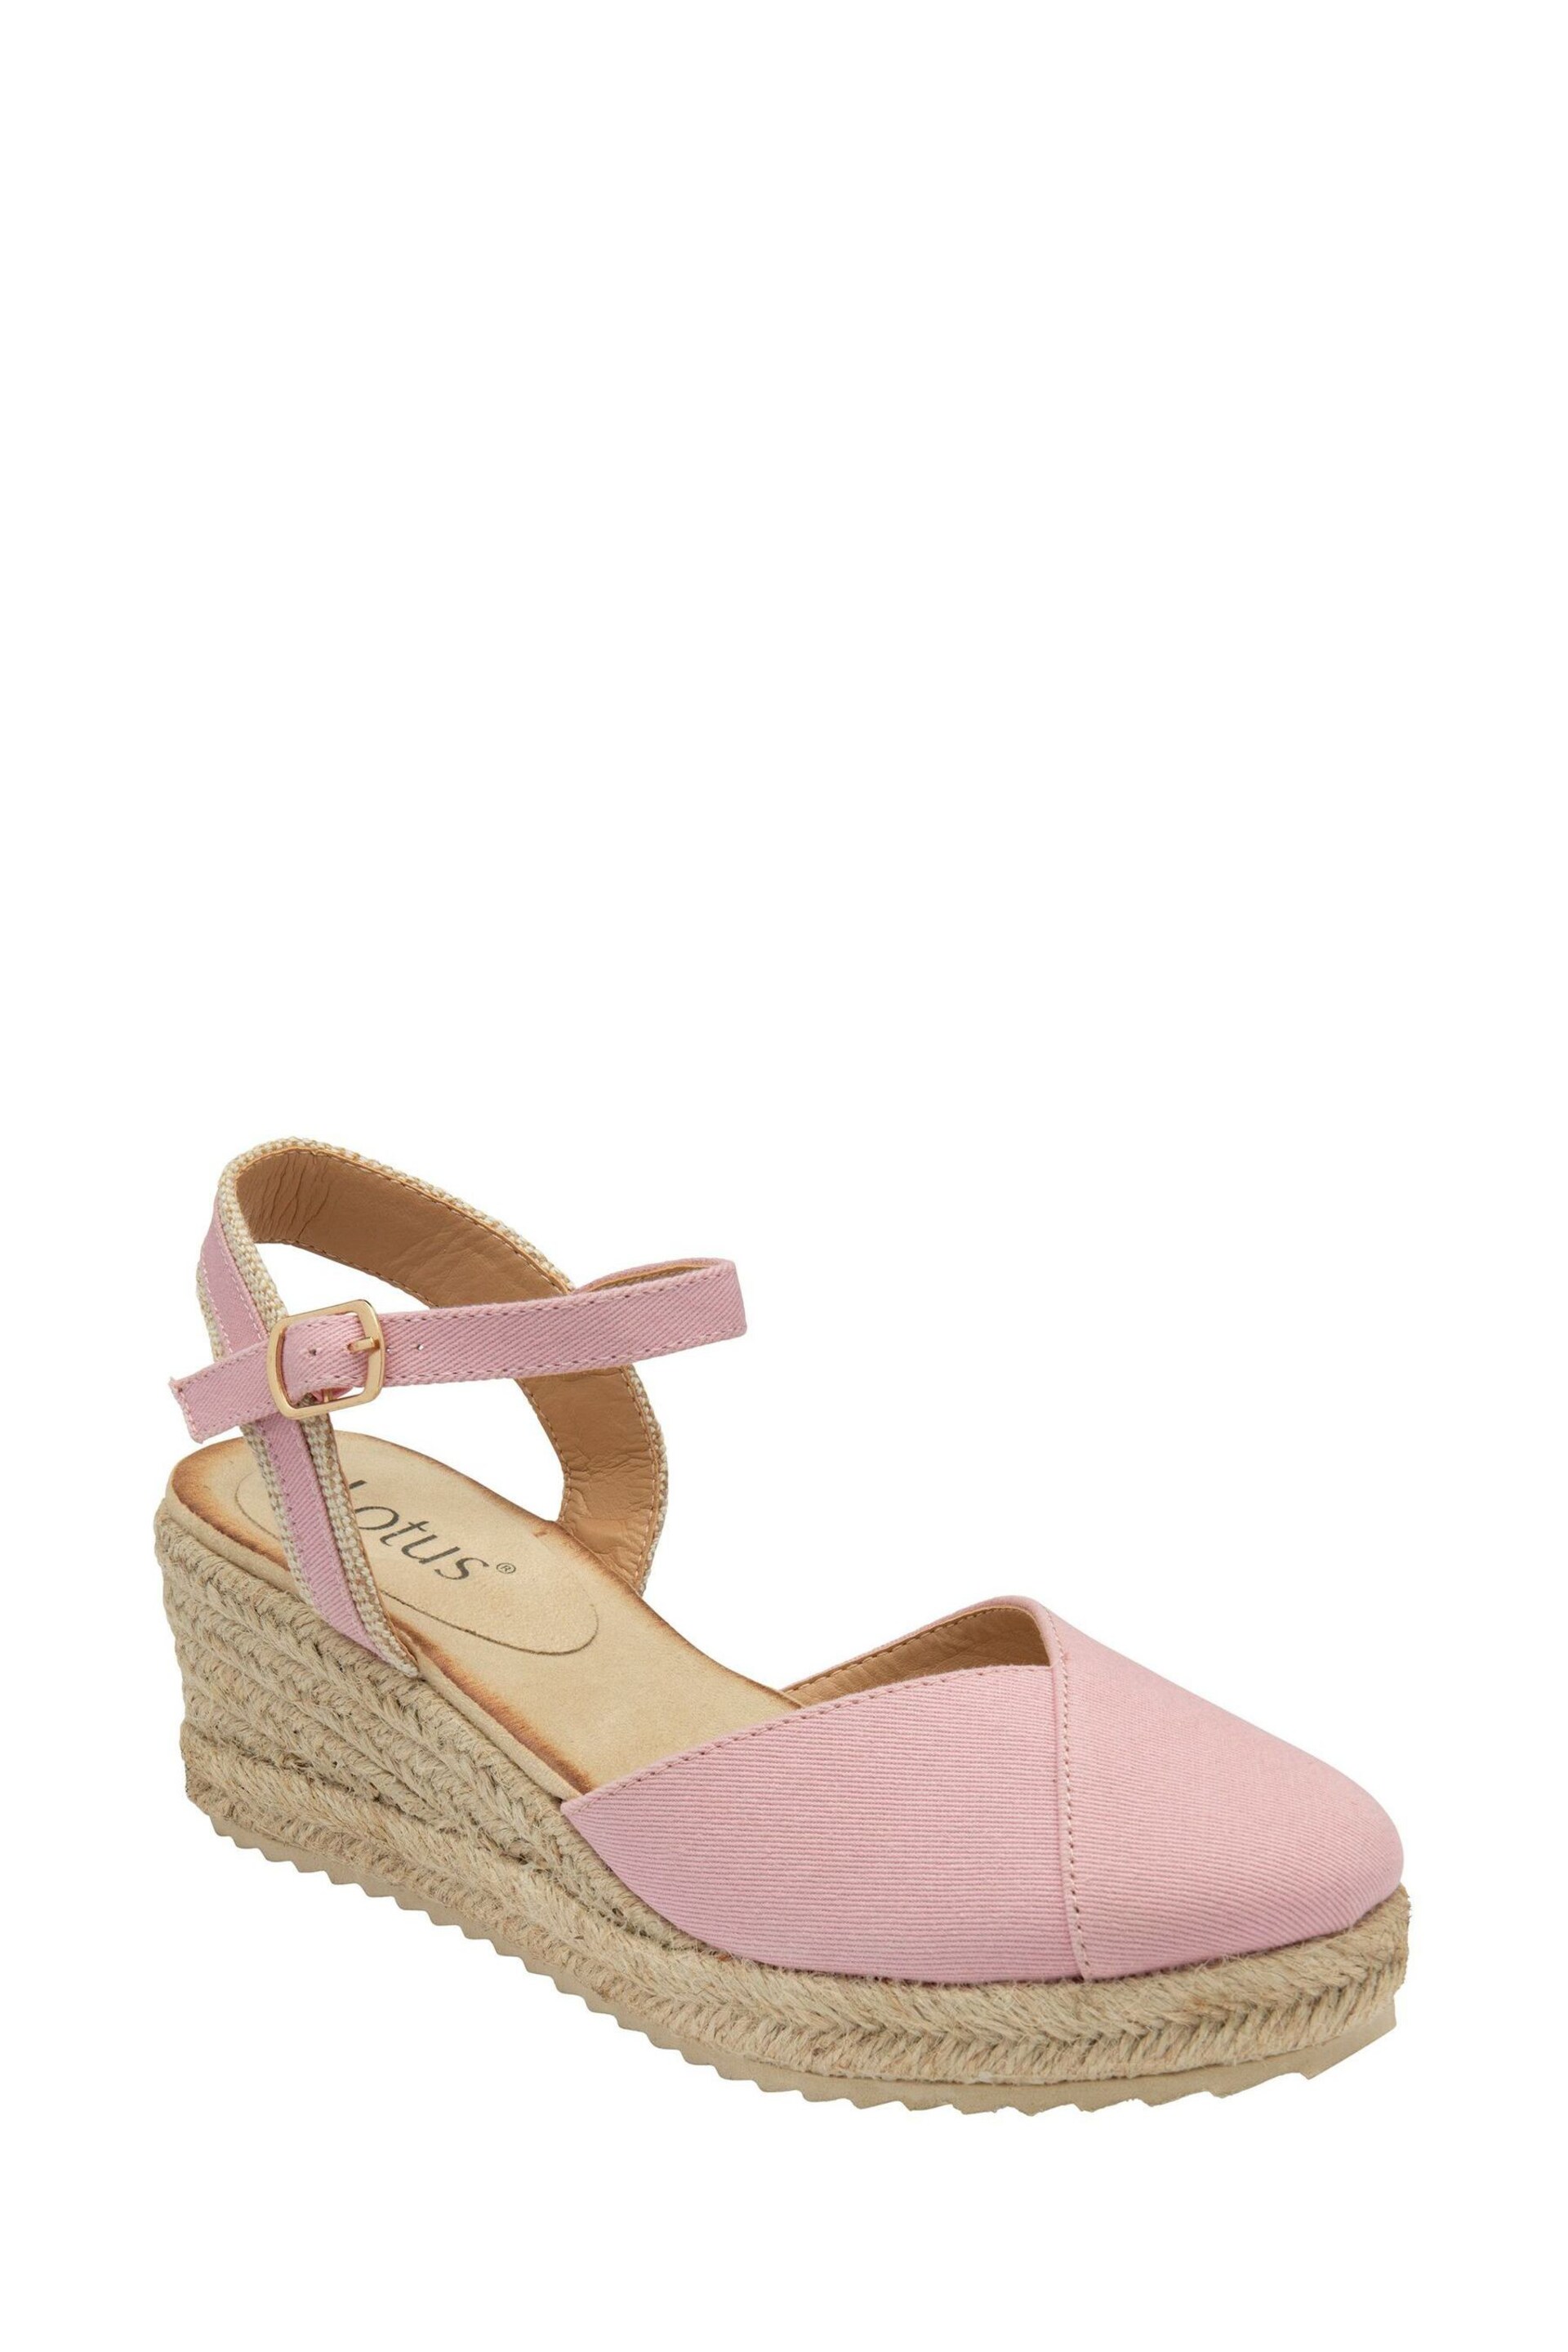 Lotus Pink Espadrille Wedge Sandals - Image 1 of 3